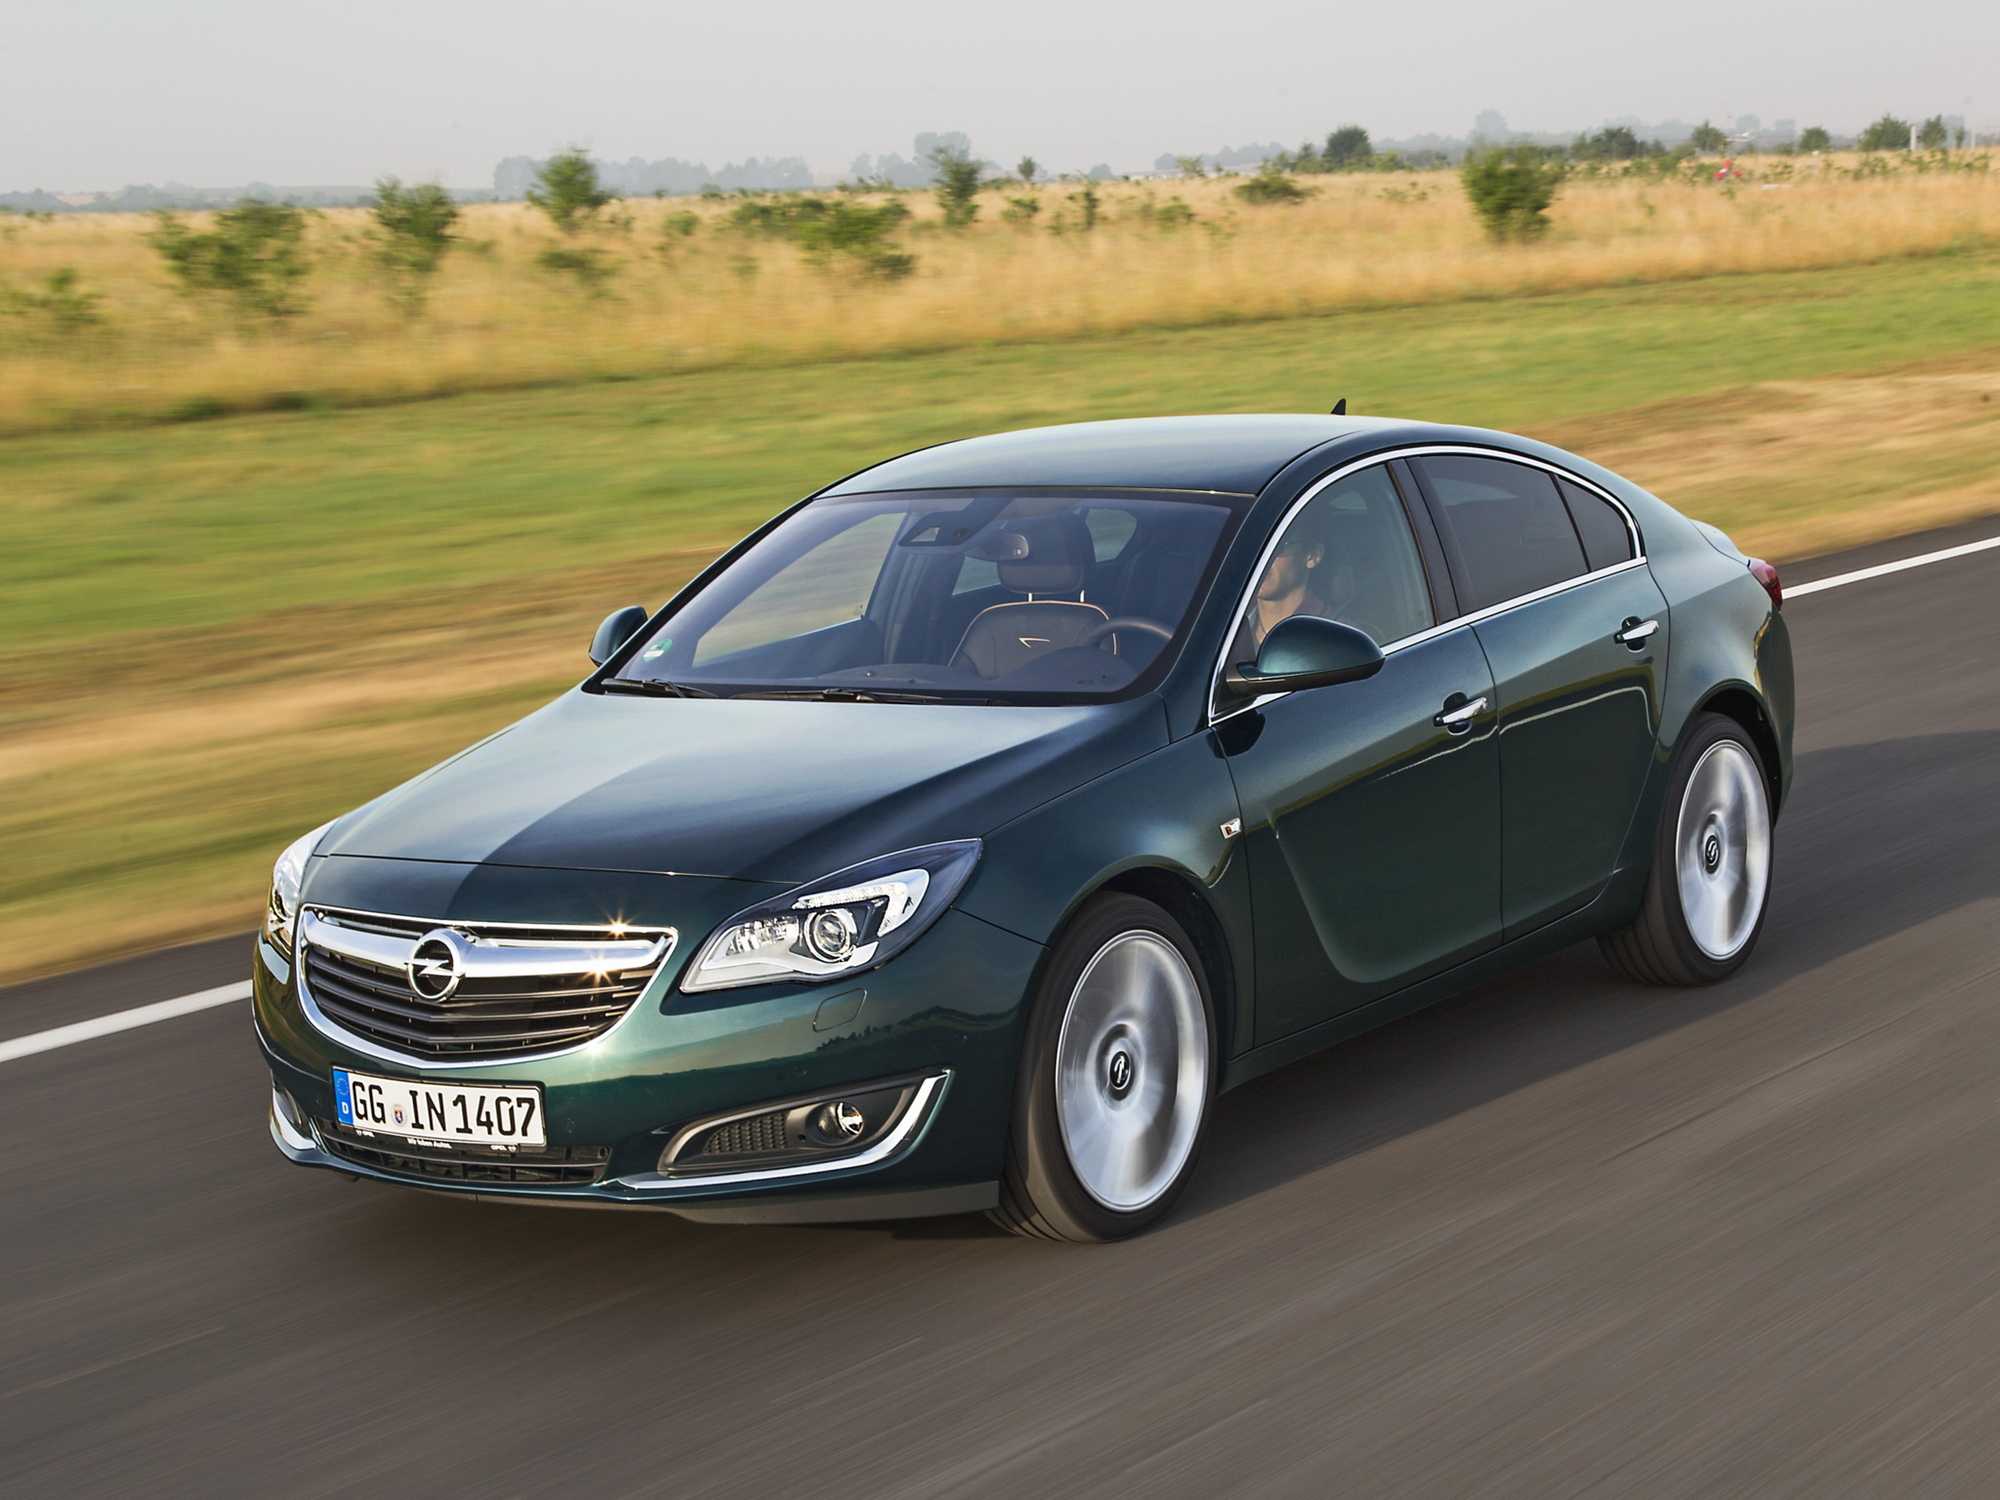 Opel insignia (опель инсигния спортс турер) универсал / business edition 2.0 / 160 л.с. / автомат (6 ст.) / передний привод